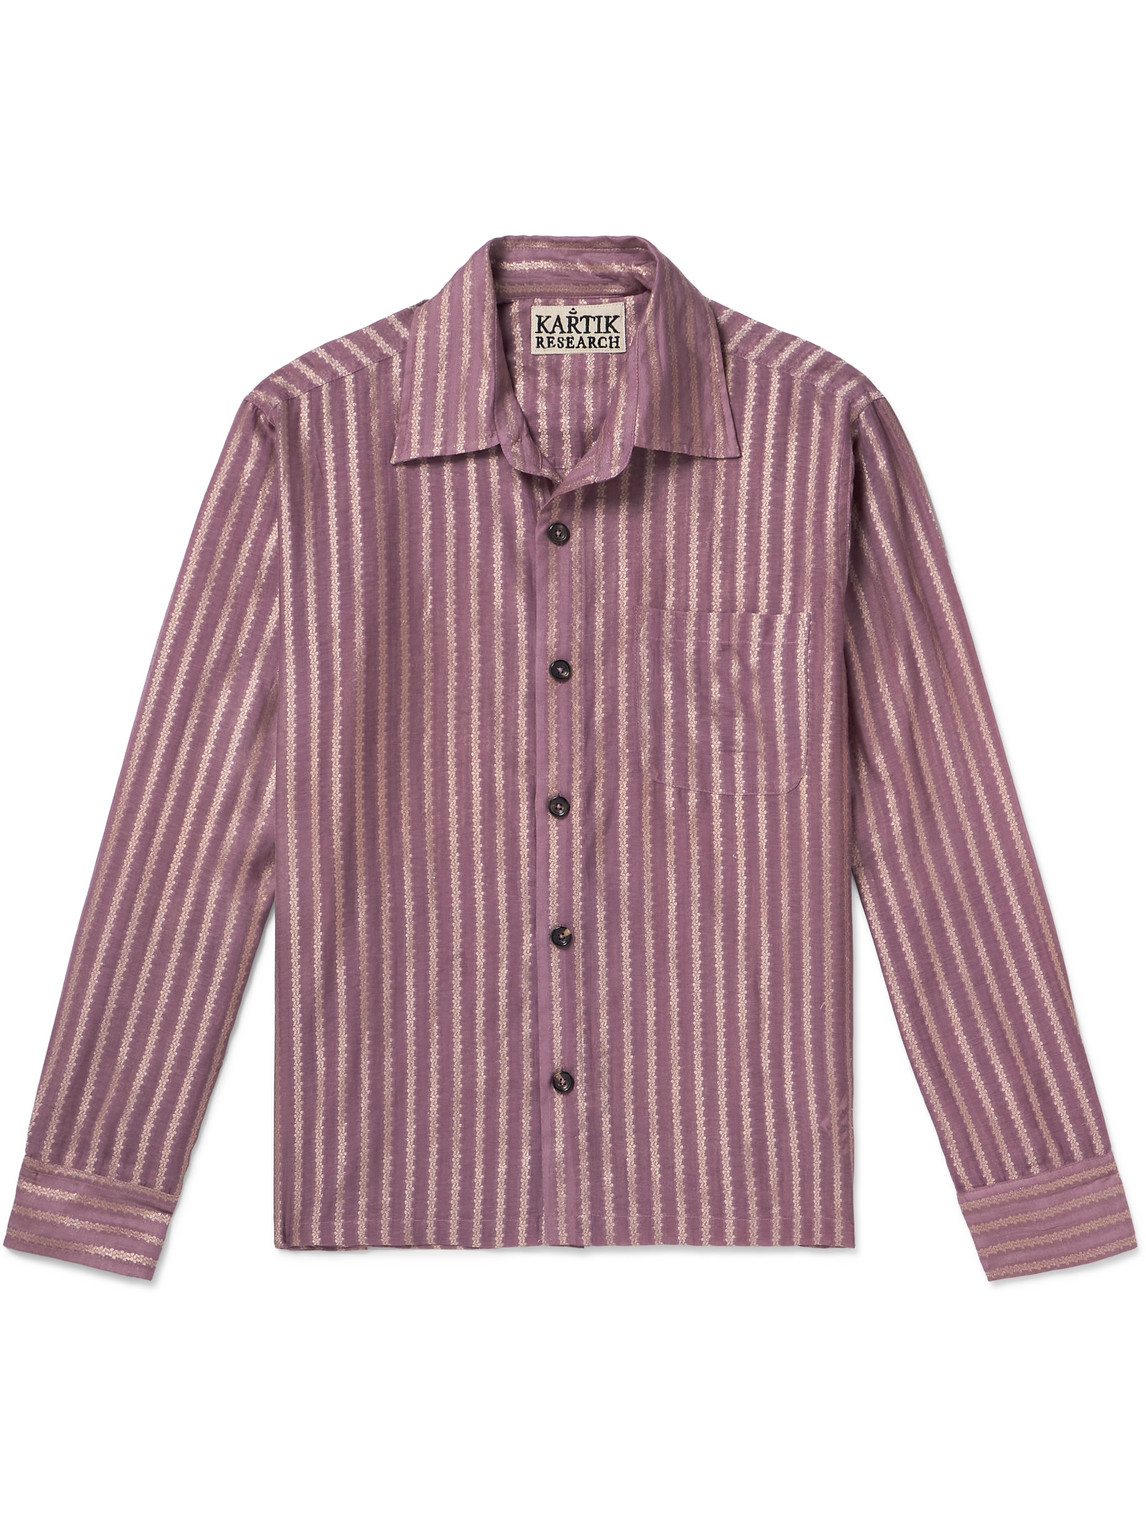 Kartik Research - Metallic Silk-Jacquard Shirt - Men - Purple - XL von Kartik Research